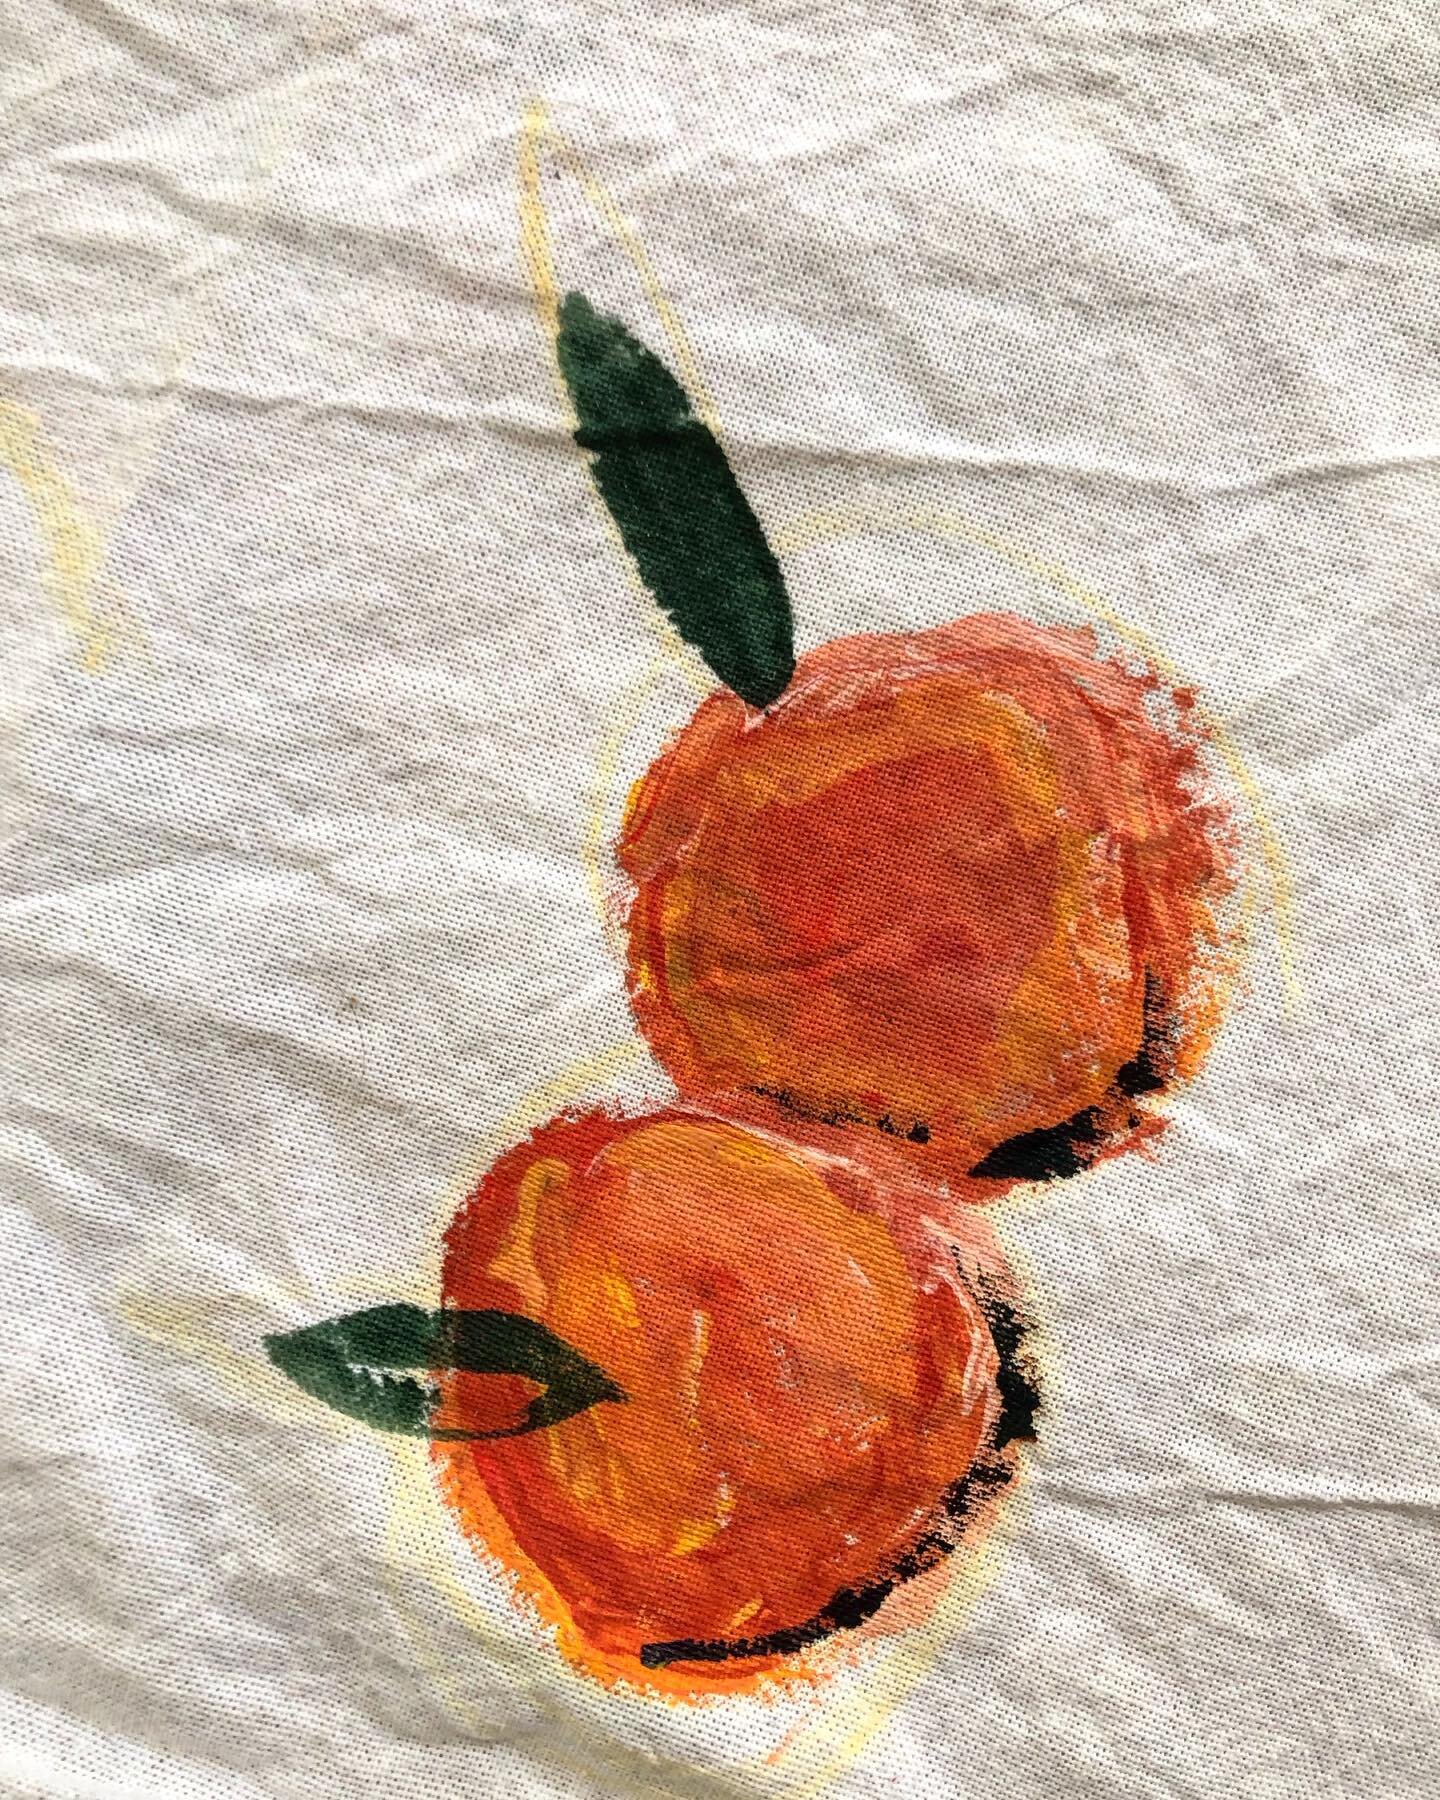 🍊 🍊
.
.
.
#felinesart #dinnertime #artwork #orangepainting #oranges #tablecloth #tafelkleed #tabledecoration